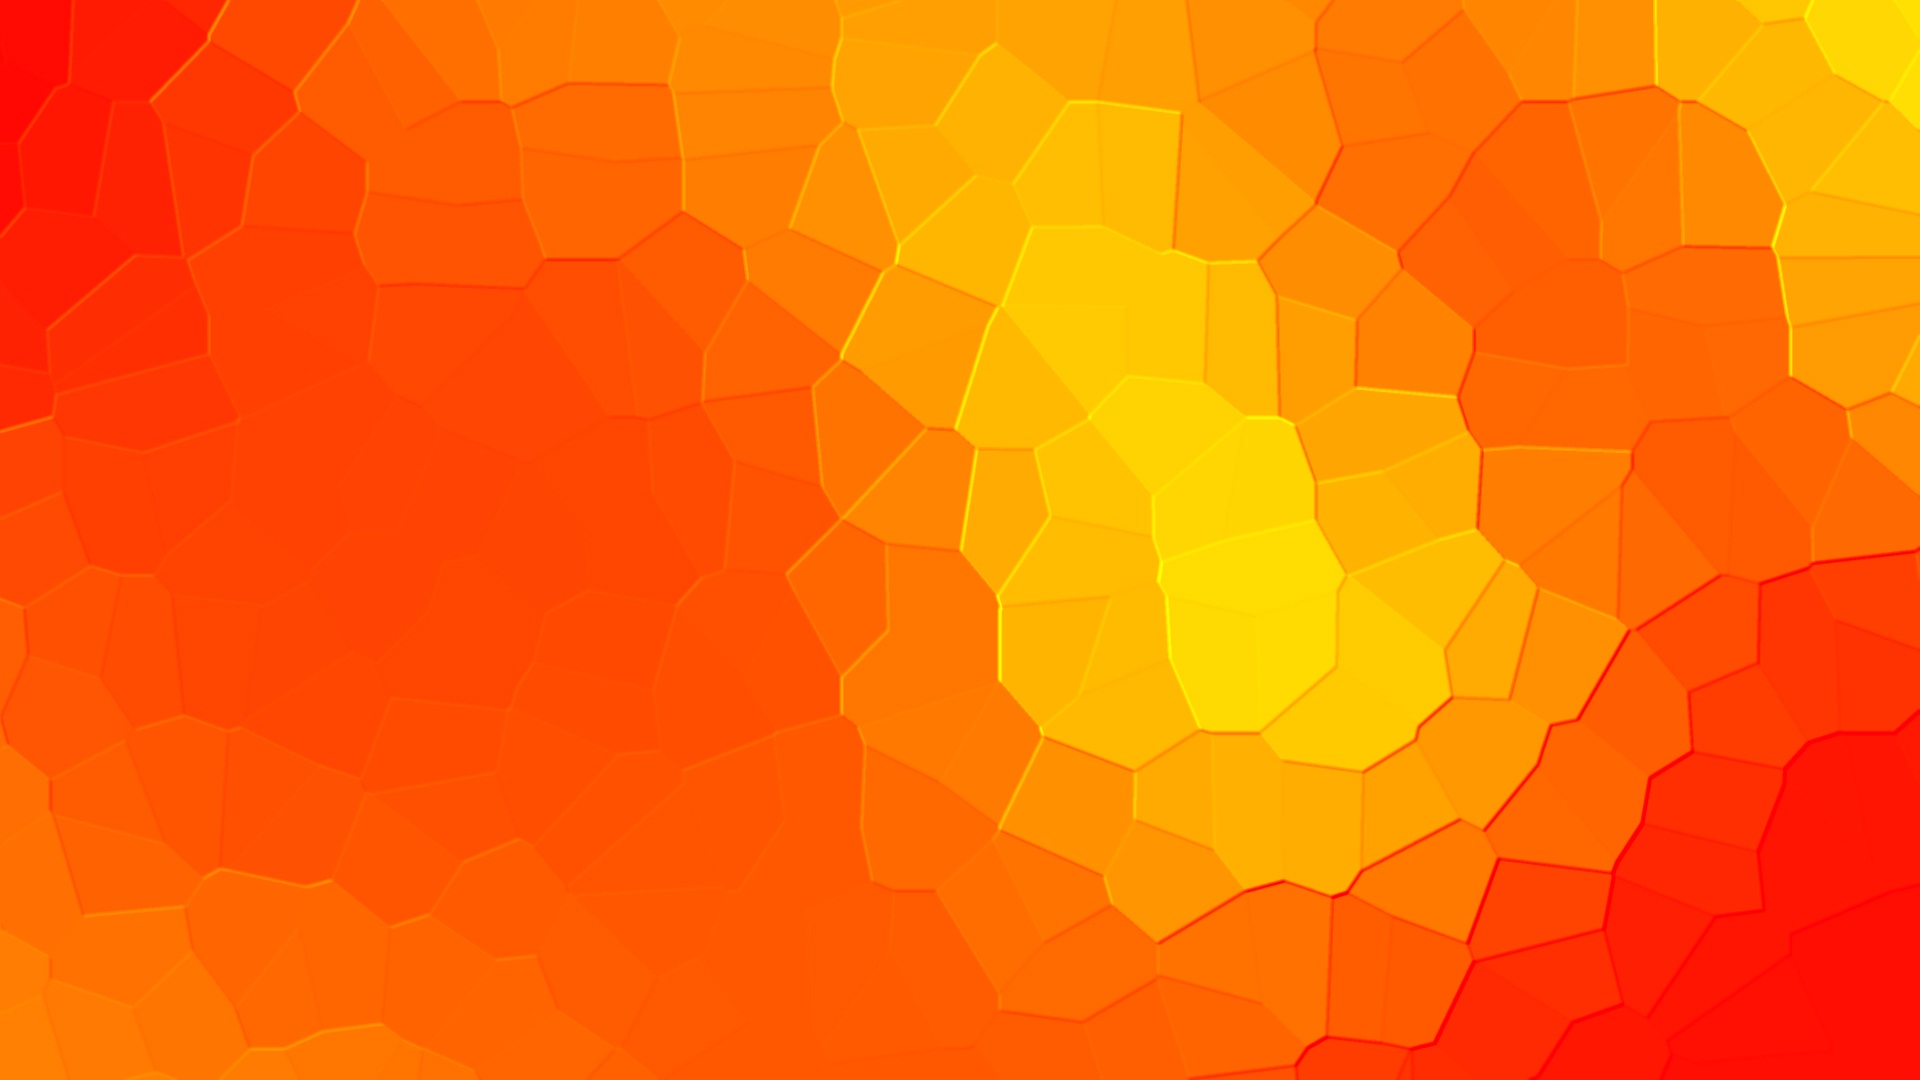 Download Pixelated orange yellow background free image download